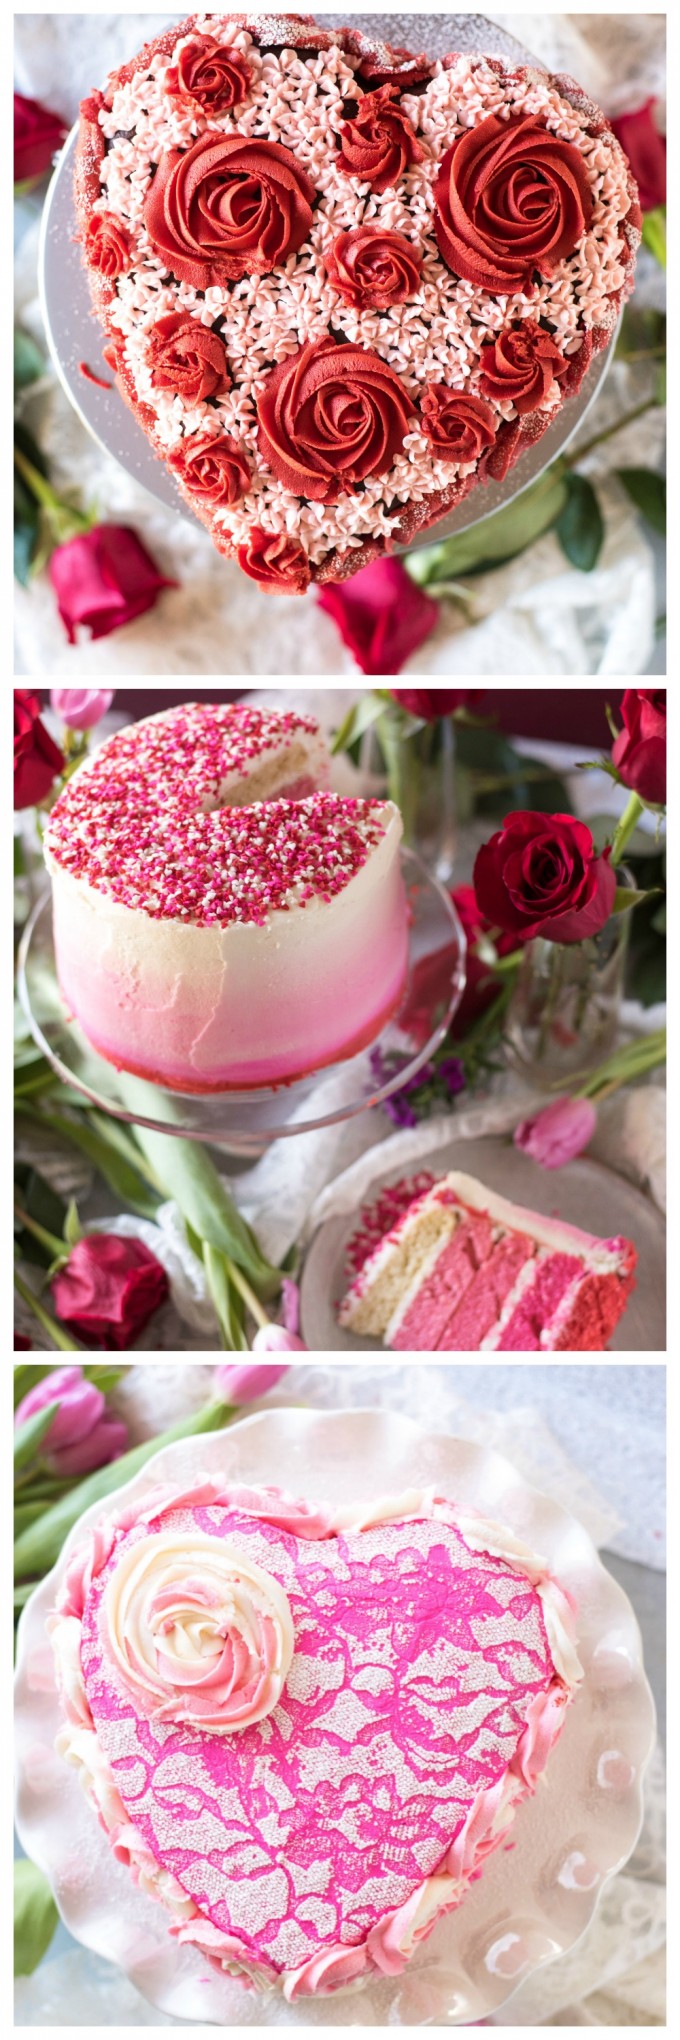 Easy Valentine's Day Cake Decorating Tutorial Go Go Go Gourmet